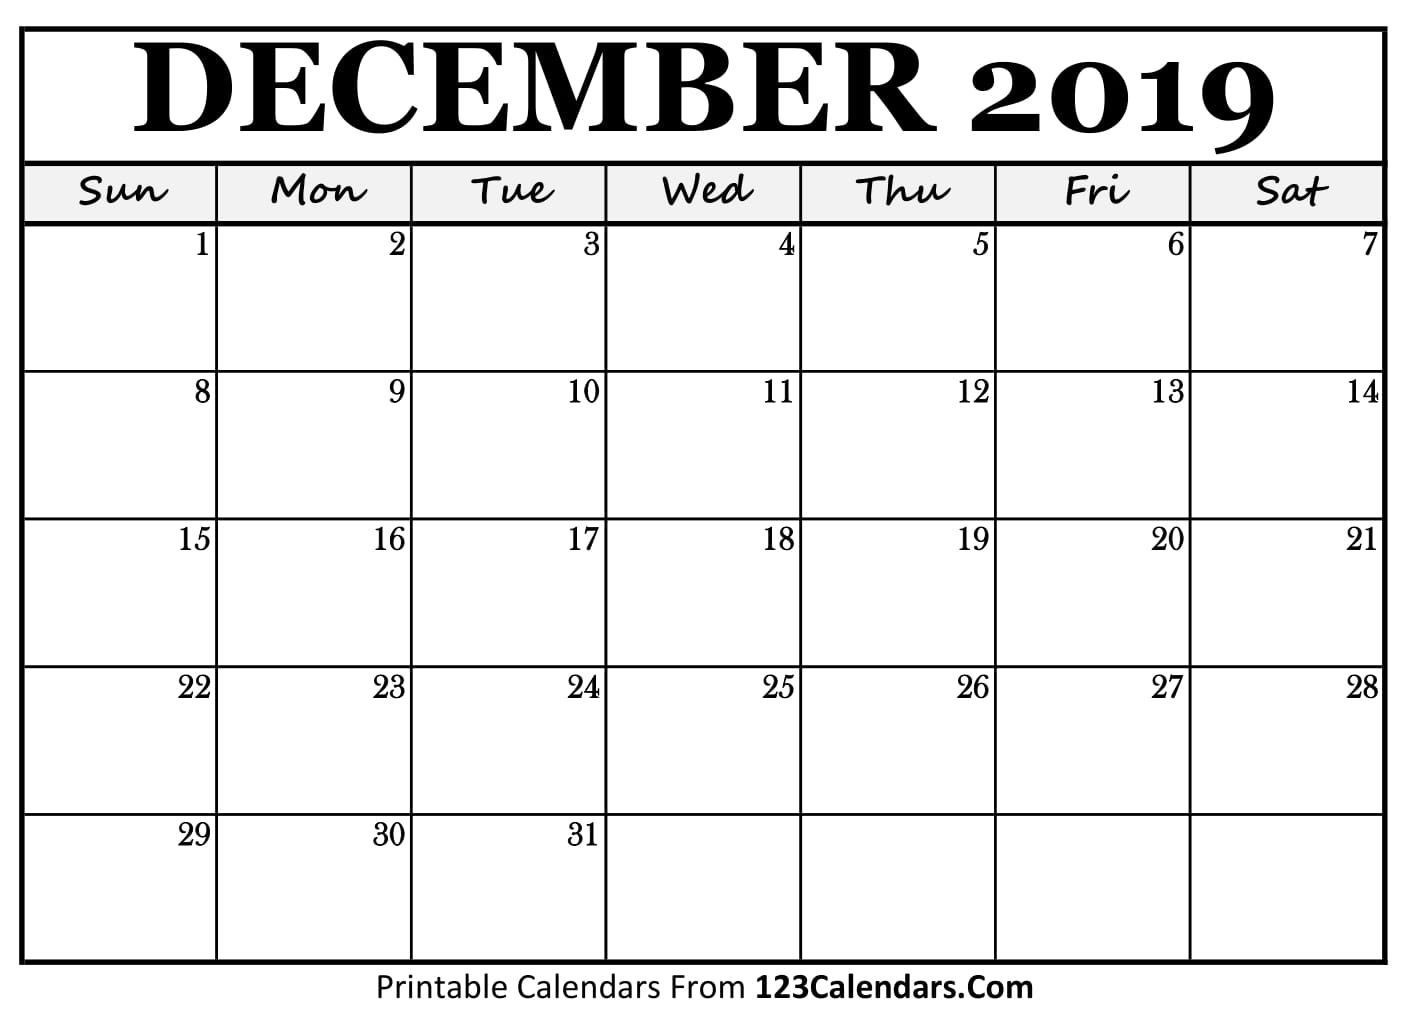 Blank December 2019 Calendar - Easily Printable - 123Calendars for Calendar Template With 194 Days